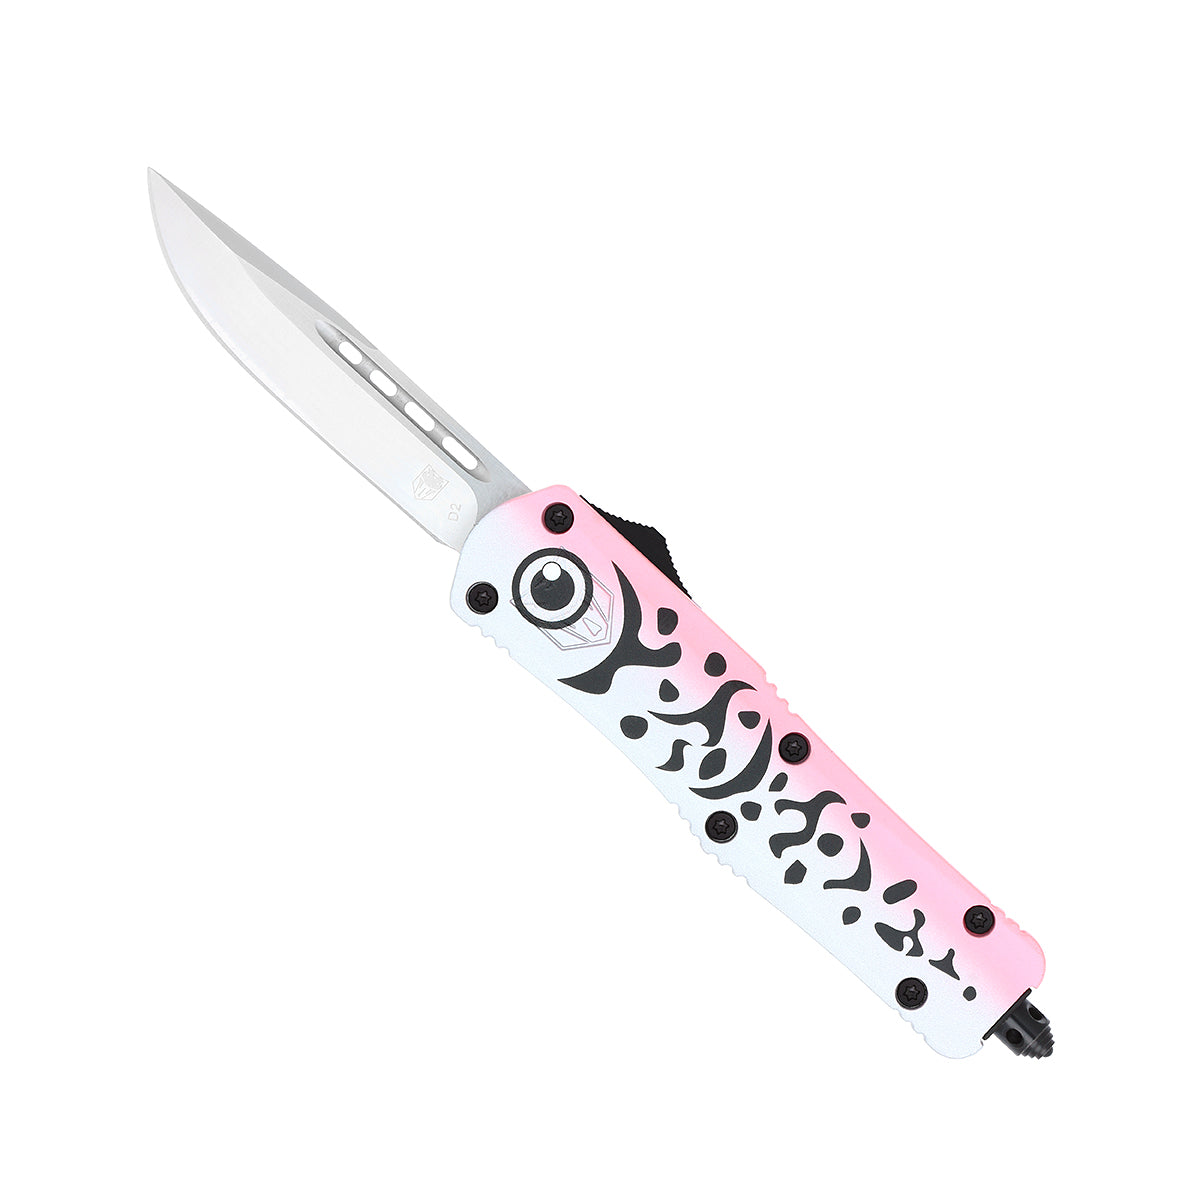 Lure Edition - CobraTec Knives